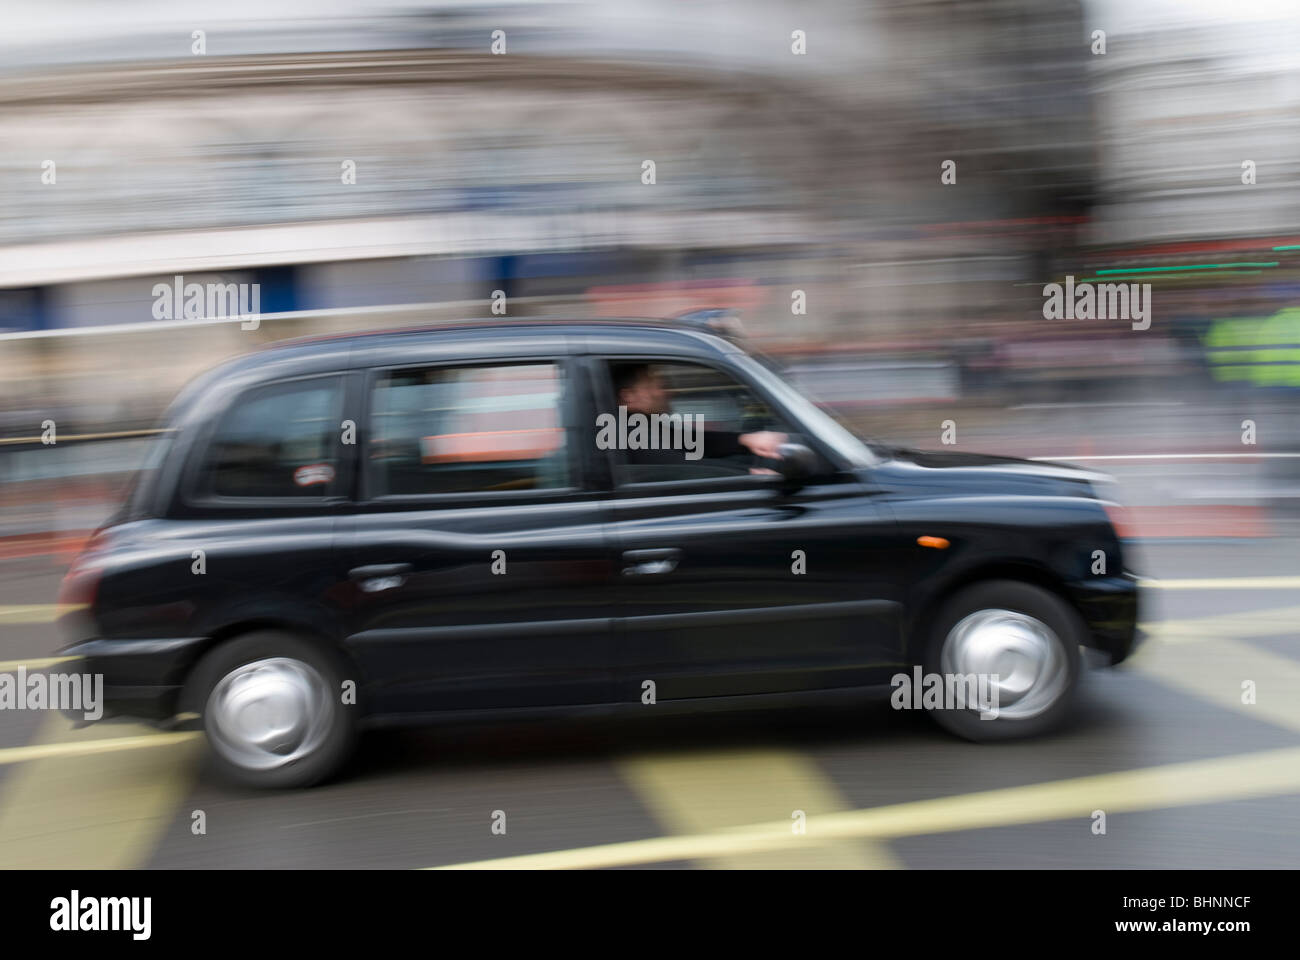 Black cab in London central Stock Photo